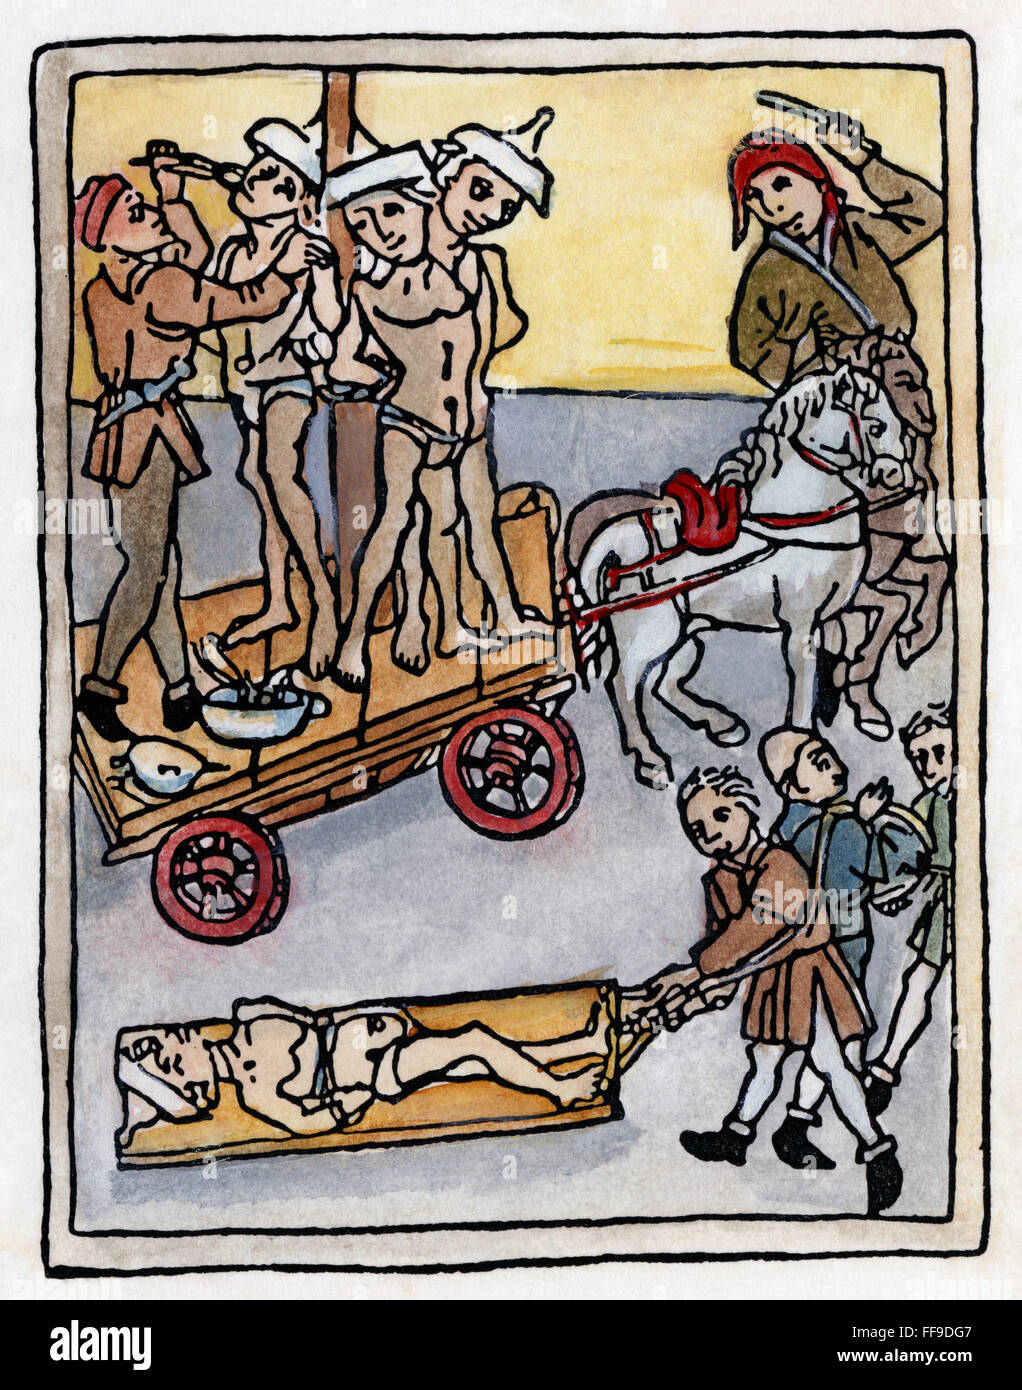 SPANISH INQUISITION. /nTorturing of Jews. Woodcut, 1475. Stock Photo